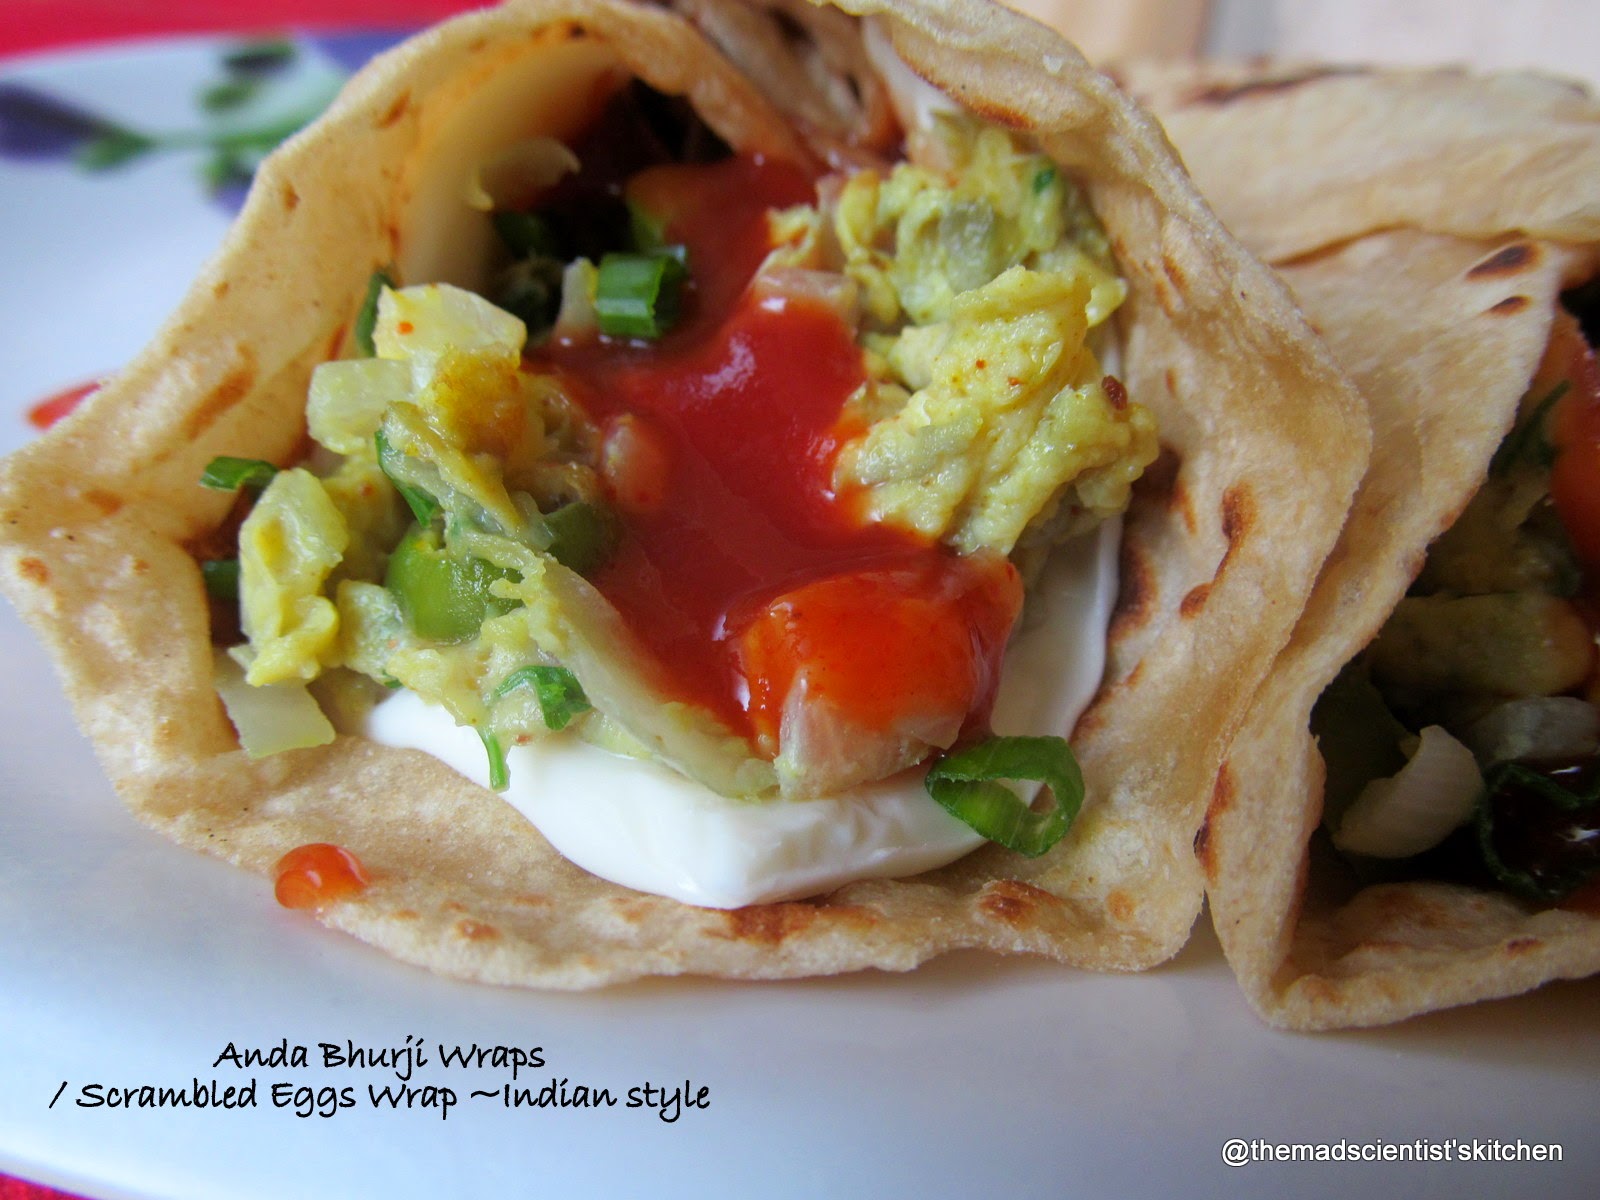 Anda Bhurji Wraps/ Scrambled Eggs Wrap ~Indian style